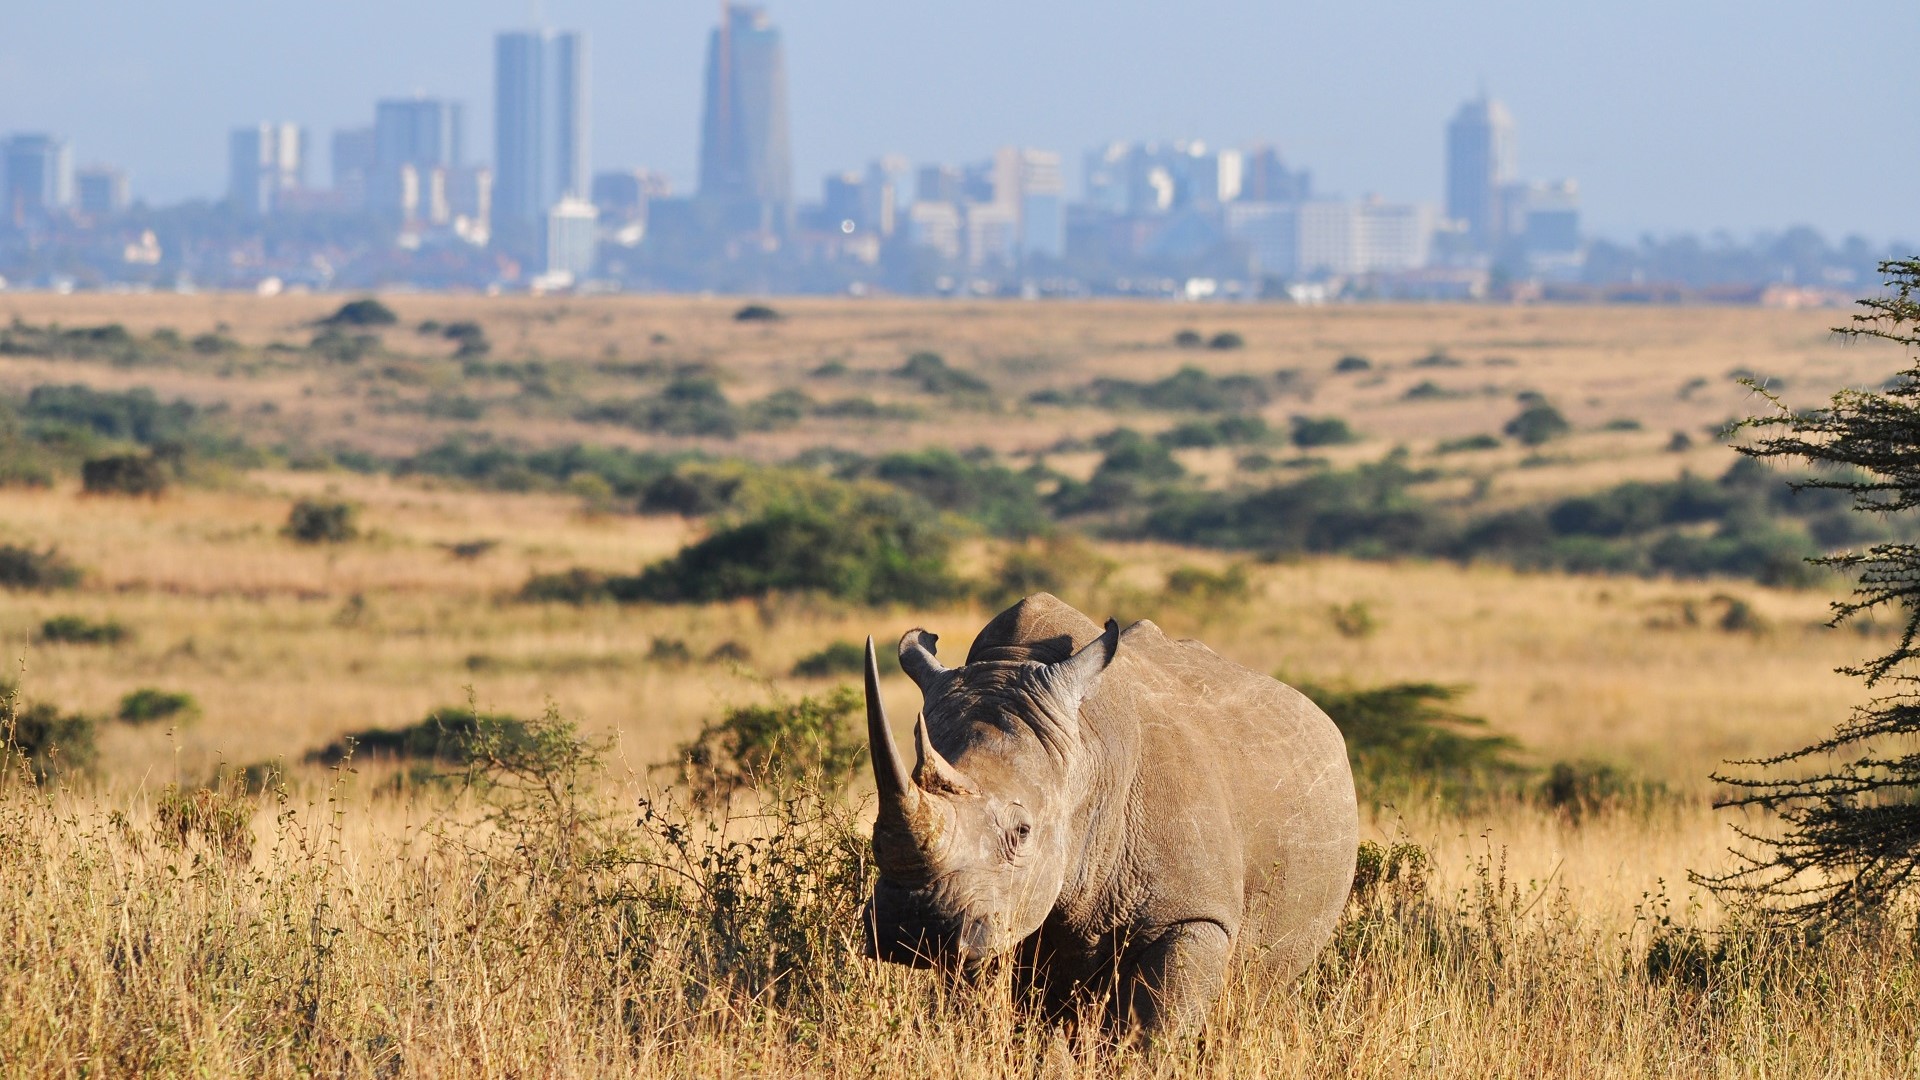 rhino in Nairobi National Park with Nairobi, Kenya skyline in background